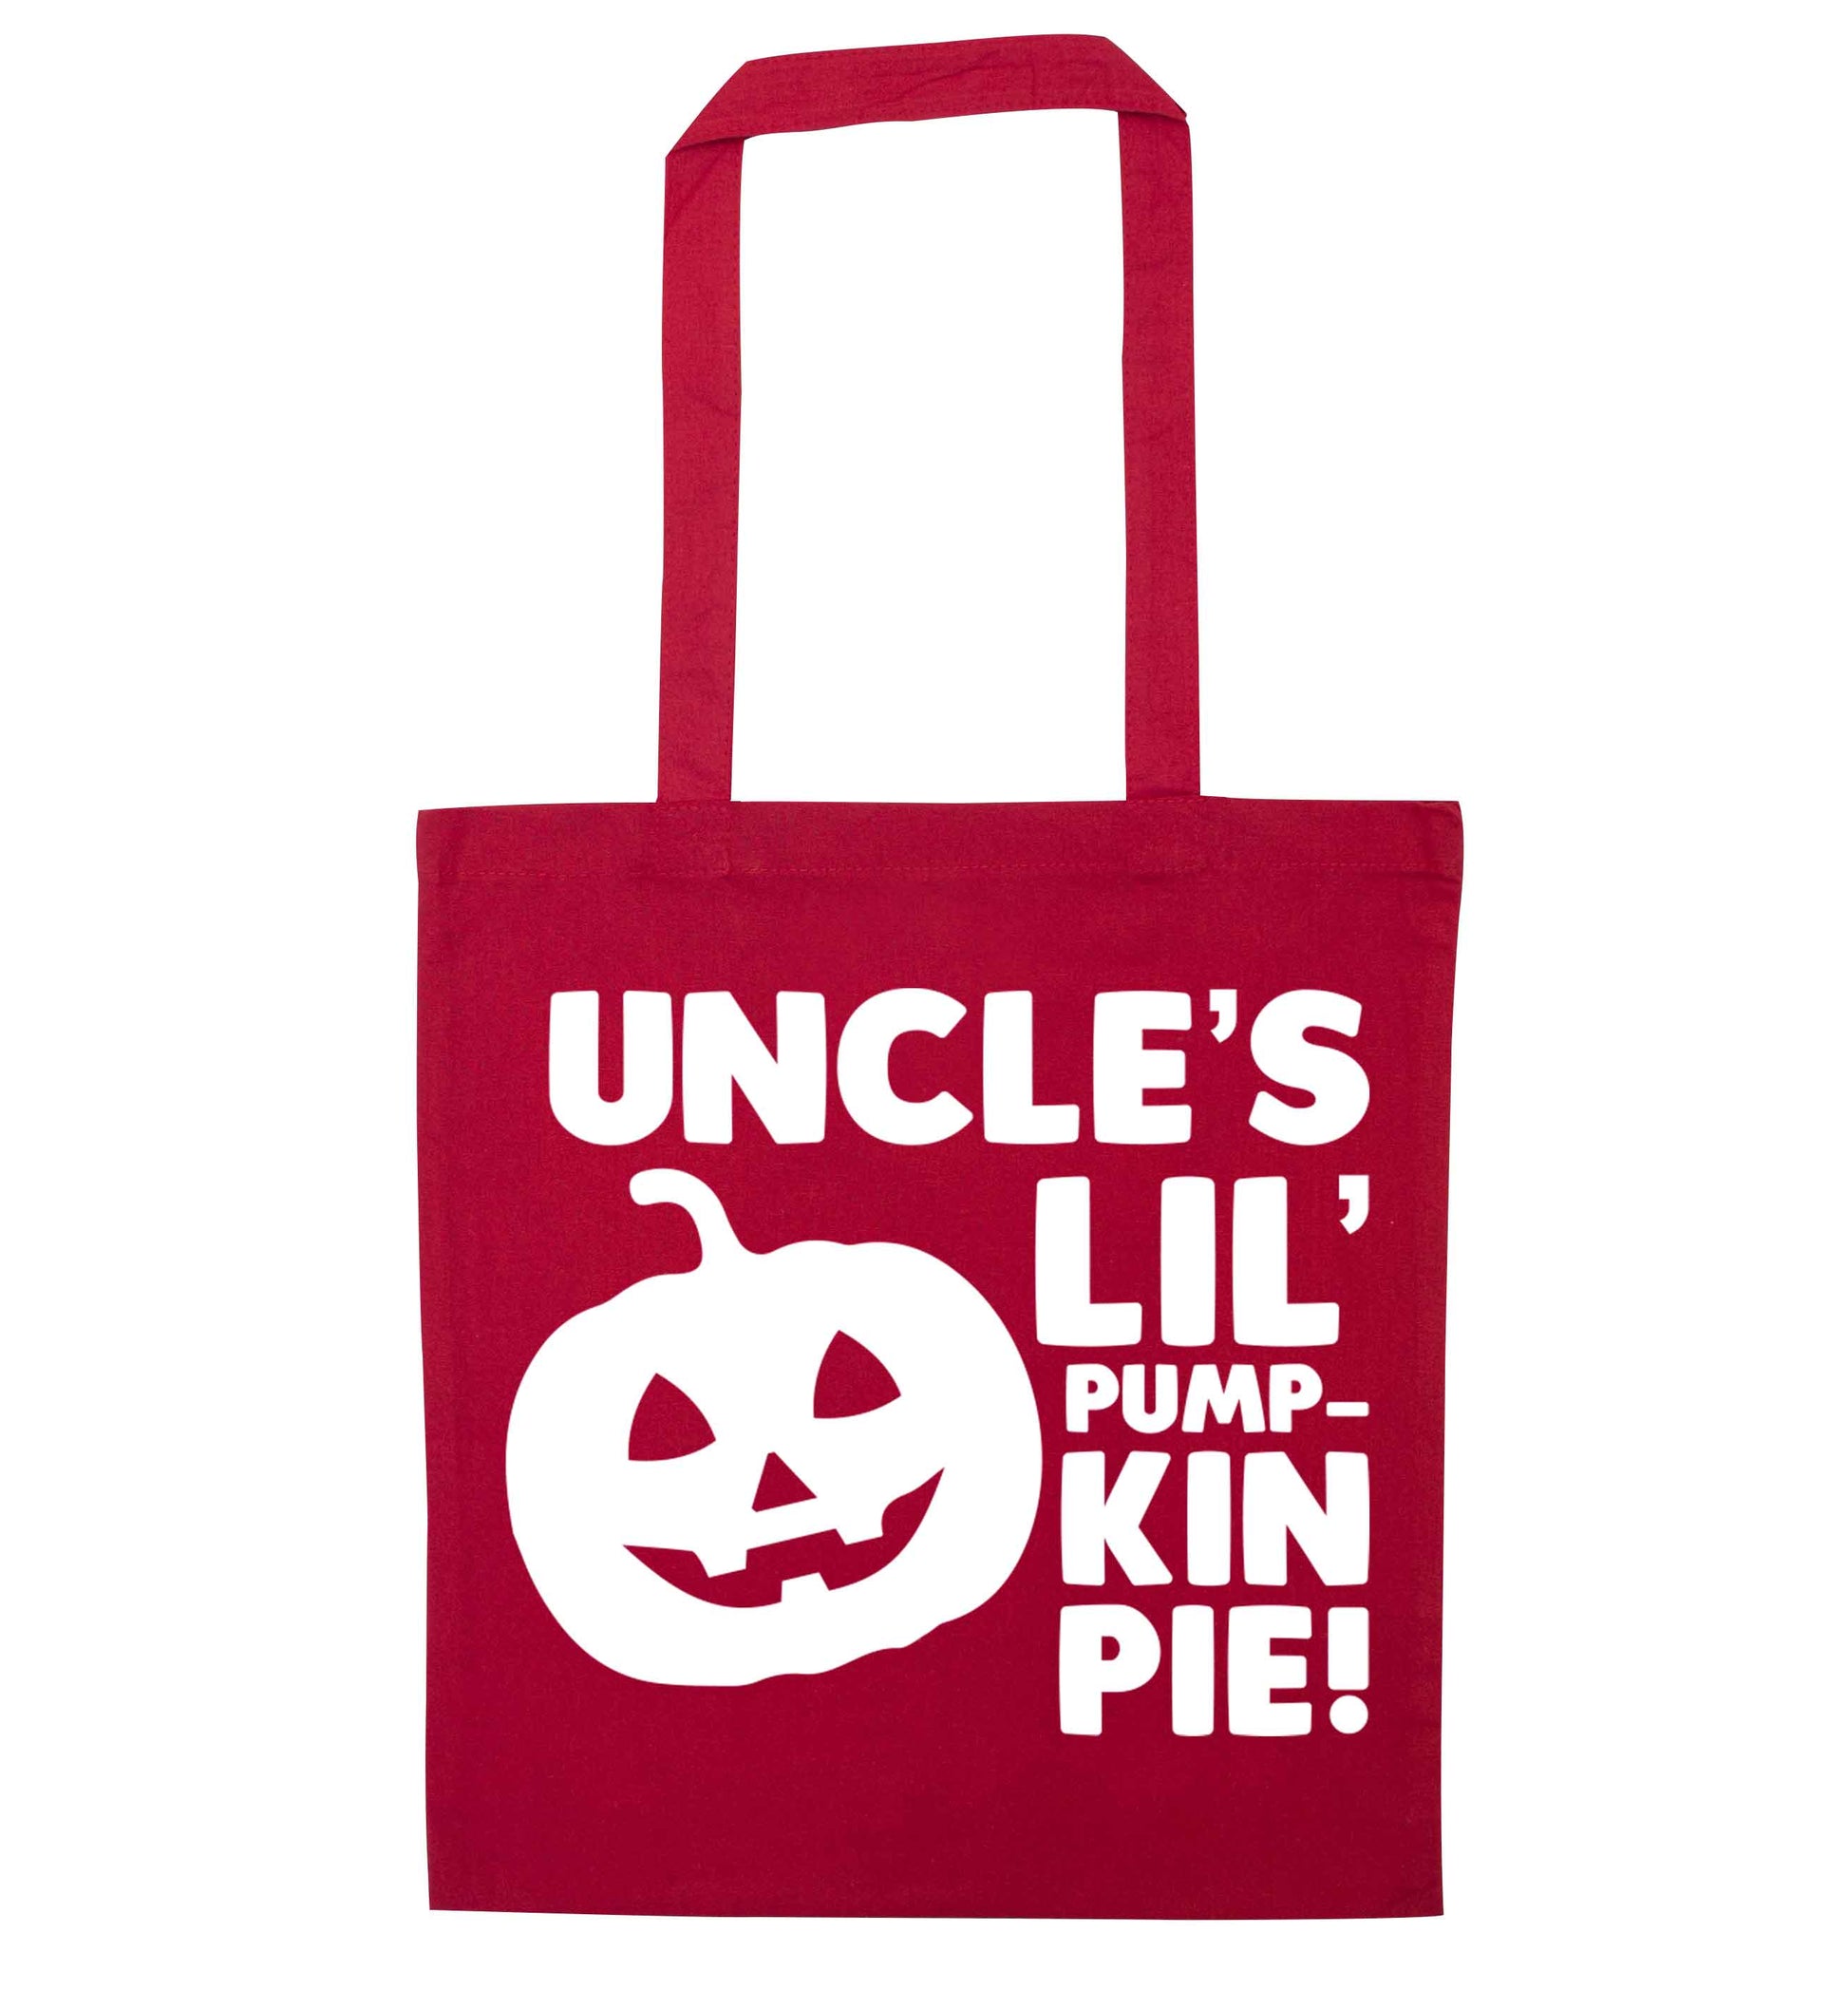 Uncle's lil' pumpkin pie red tote bag